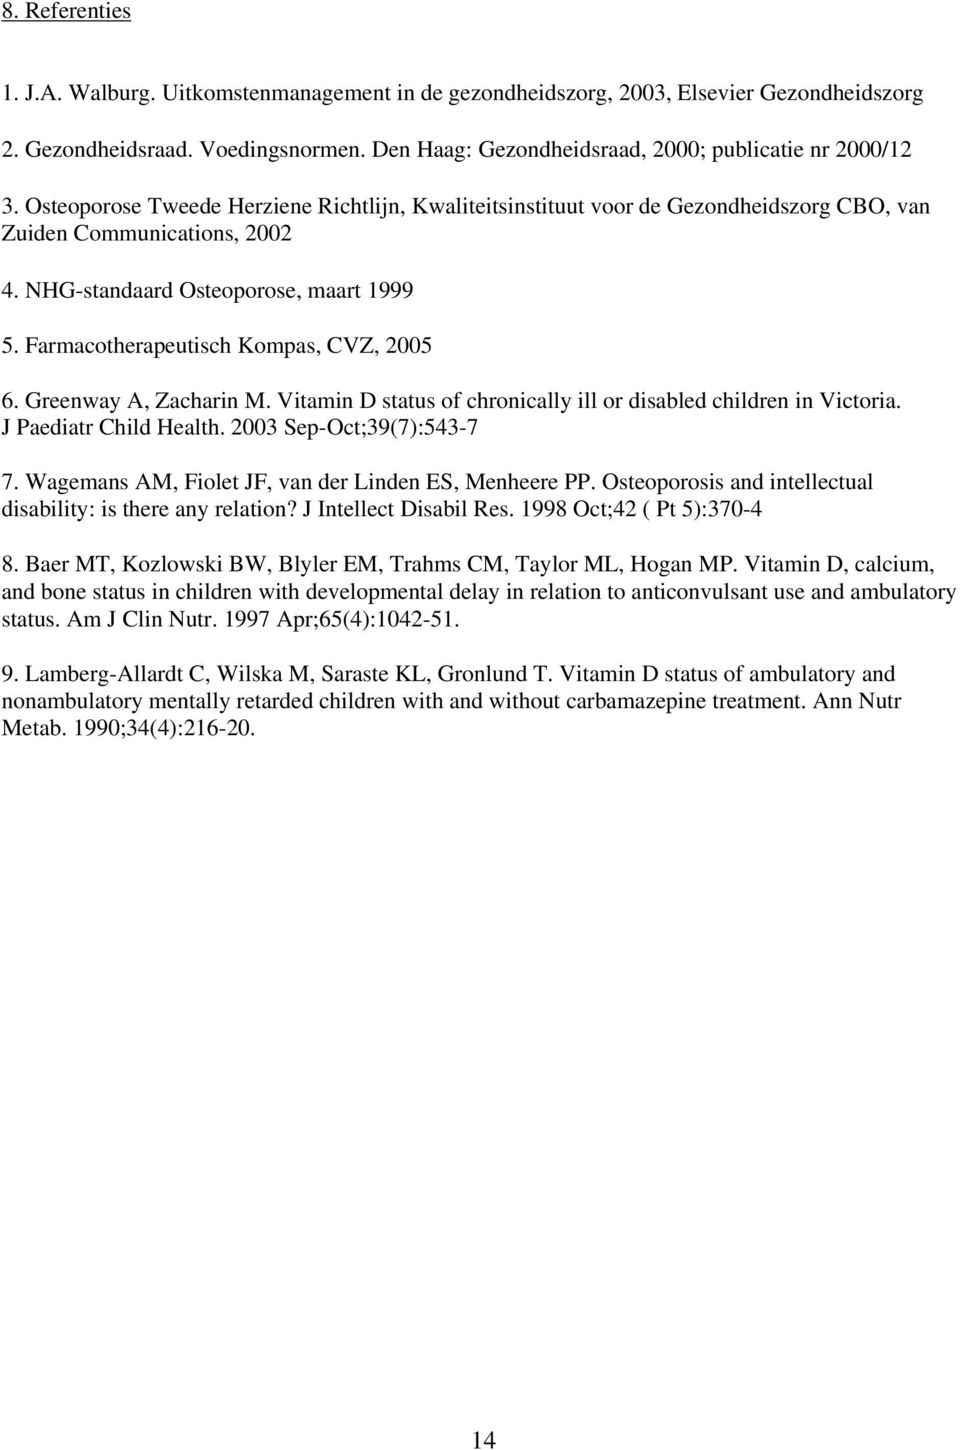 Farmacotherapeutisch Kompas, CVZ, 2005 6. Greenway A, Zacharin M. Vitamin D status of chronically ill or disabled children in Victoria. J Paediatr Child Health. 2003 Sep-Oct;39(7):543-7 7.